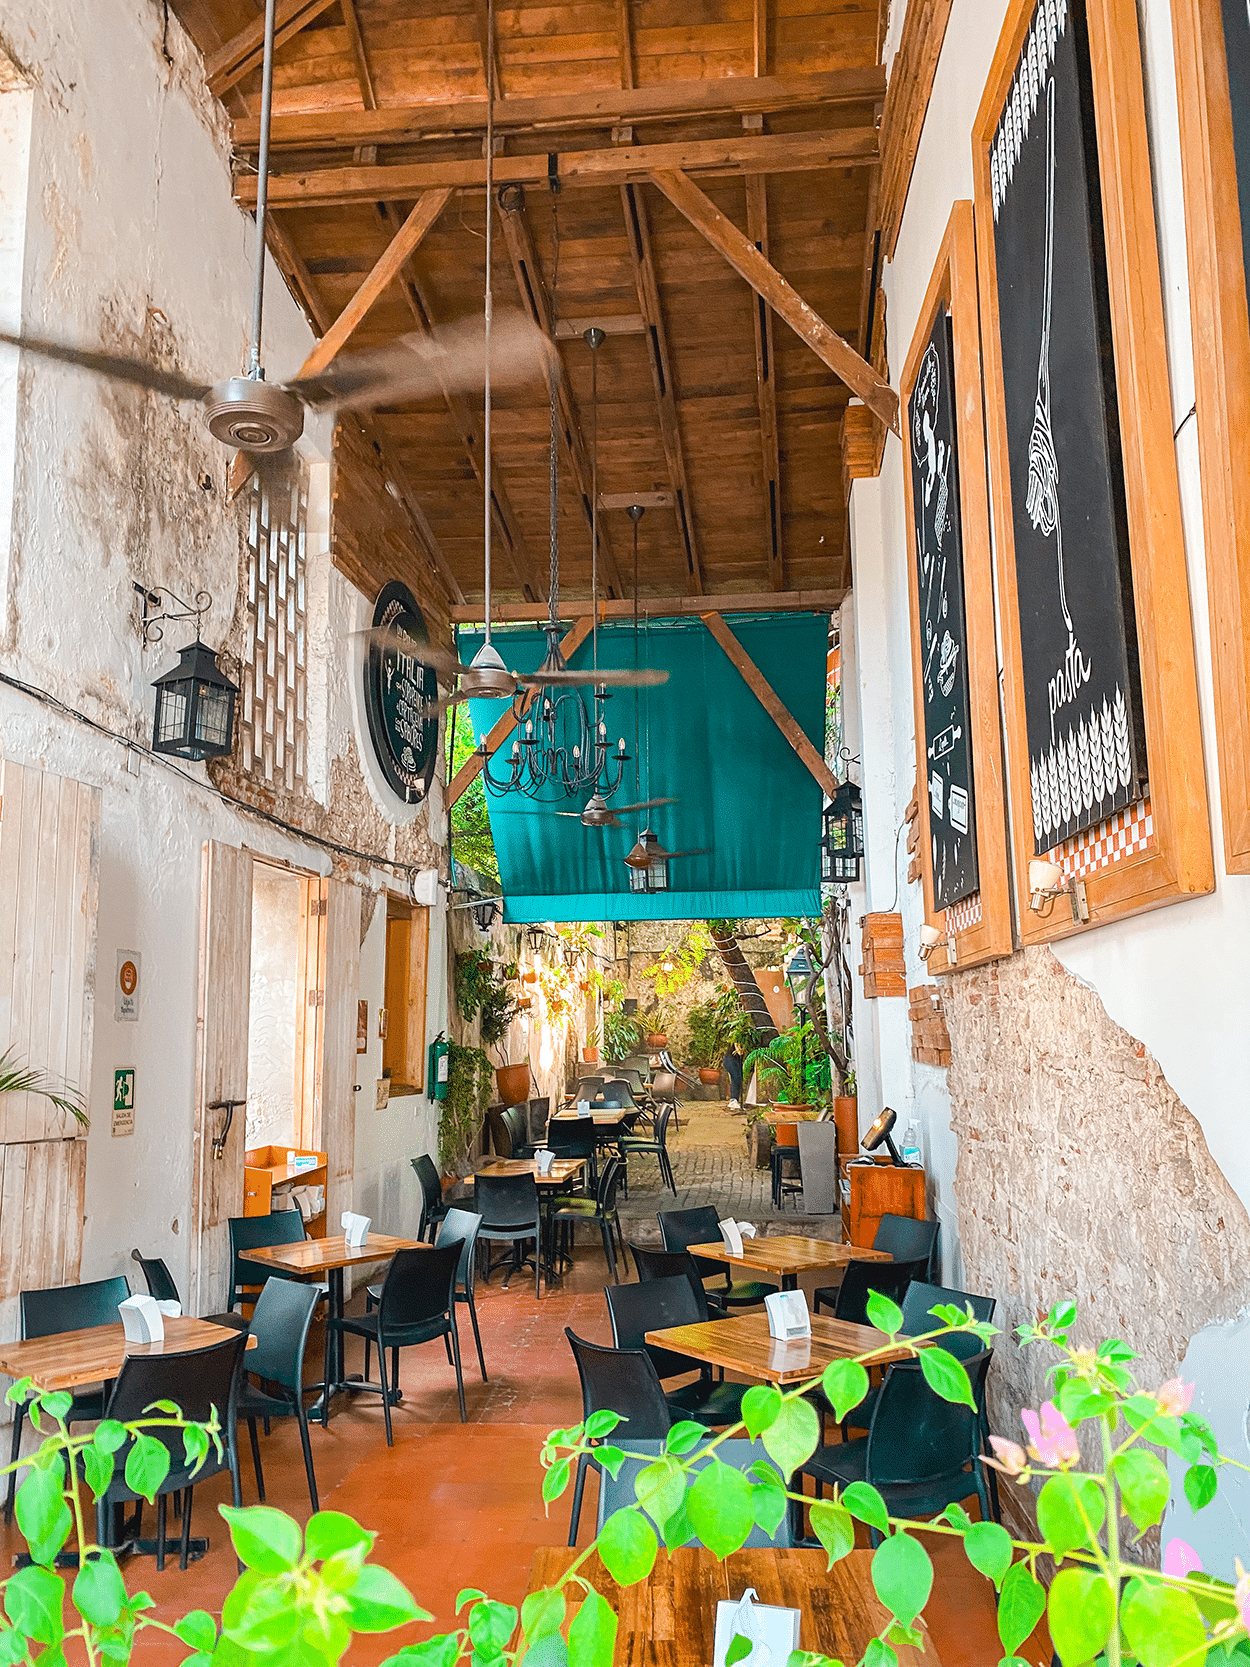 Da Silvio Restaurant in Cartagena Colombia - photo by Keryn Means editor of TwistTravelMag.com